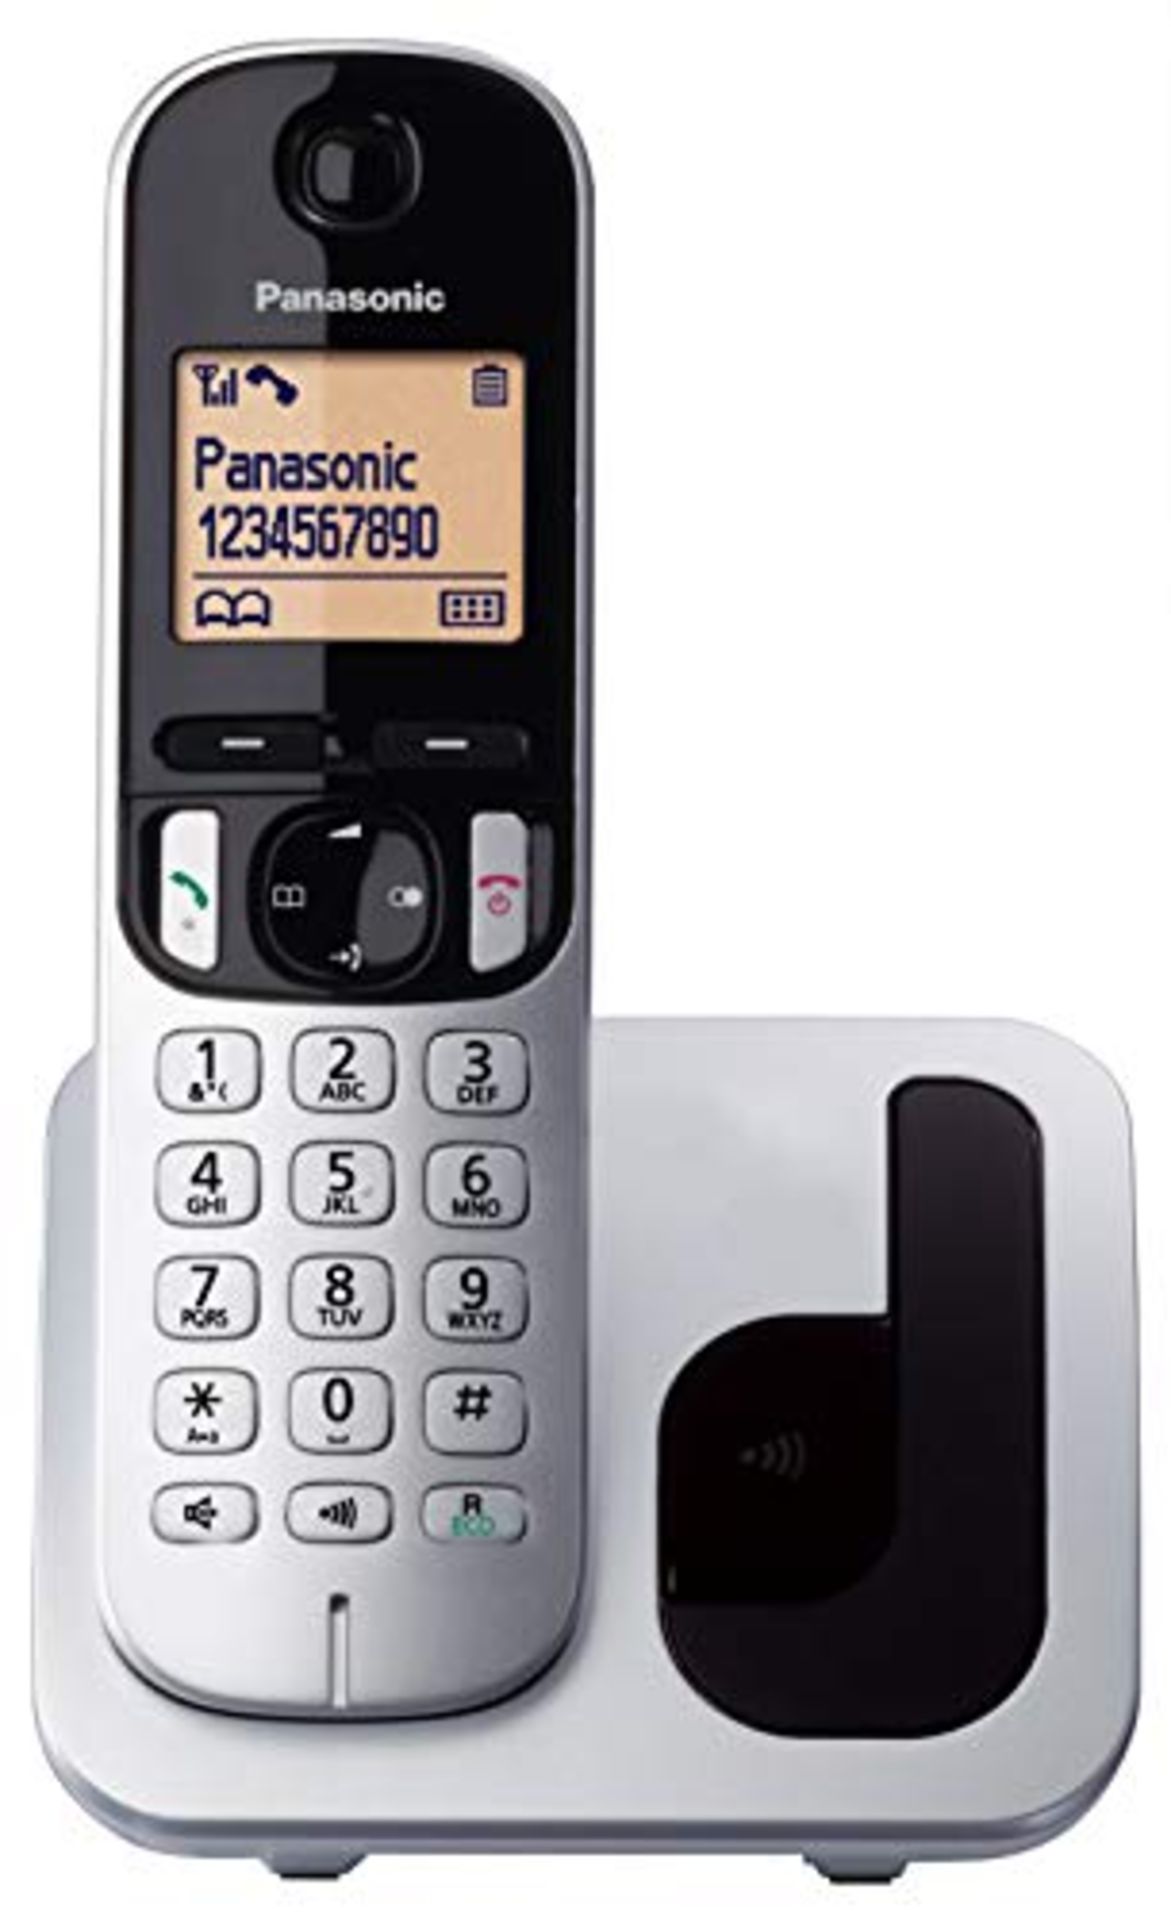 Panasonic Wireless landline telephone with LCD, caller ID, 50-number phone book, navig